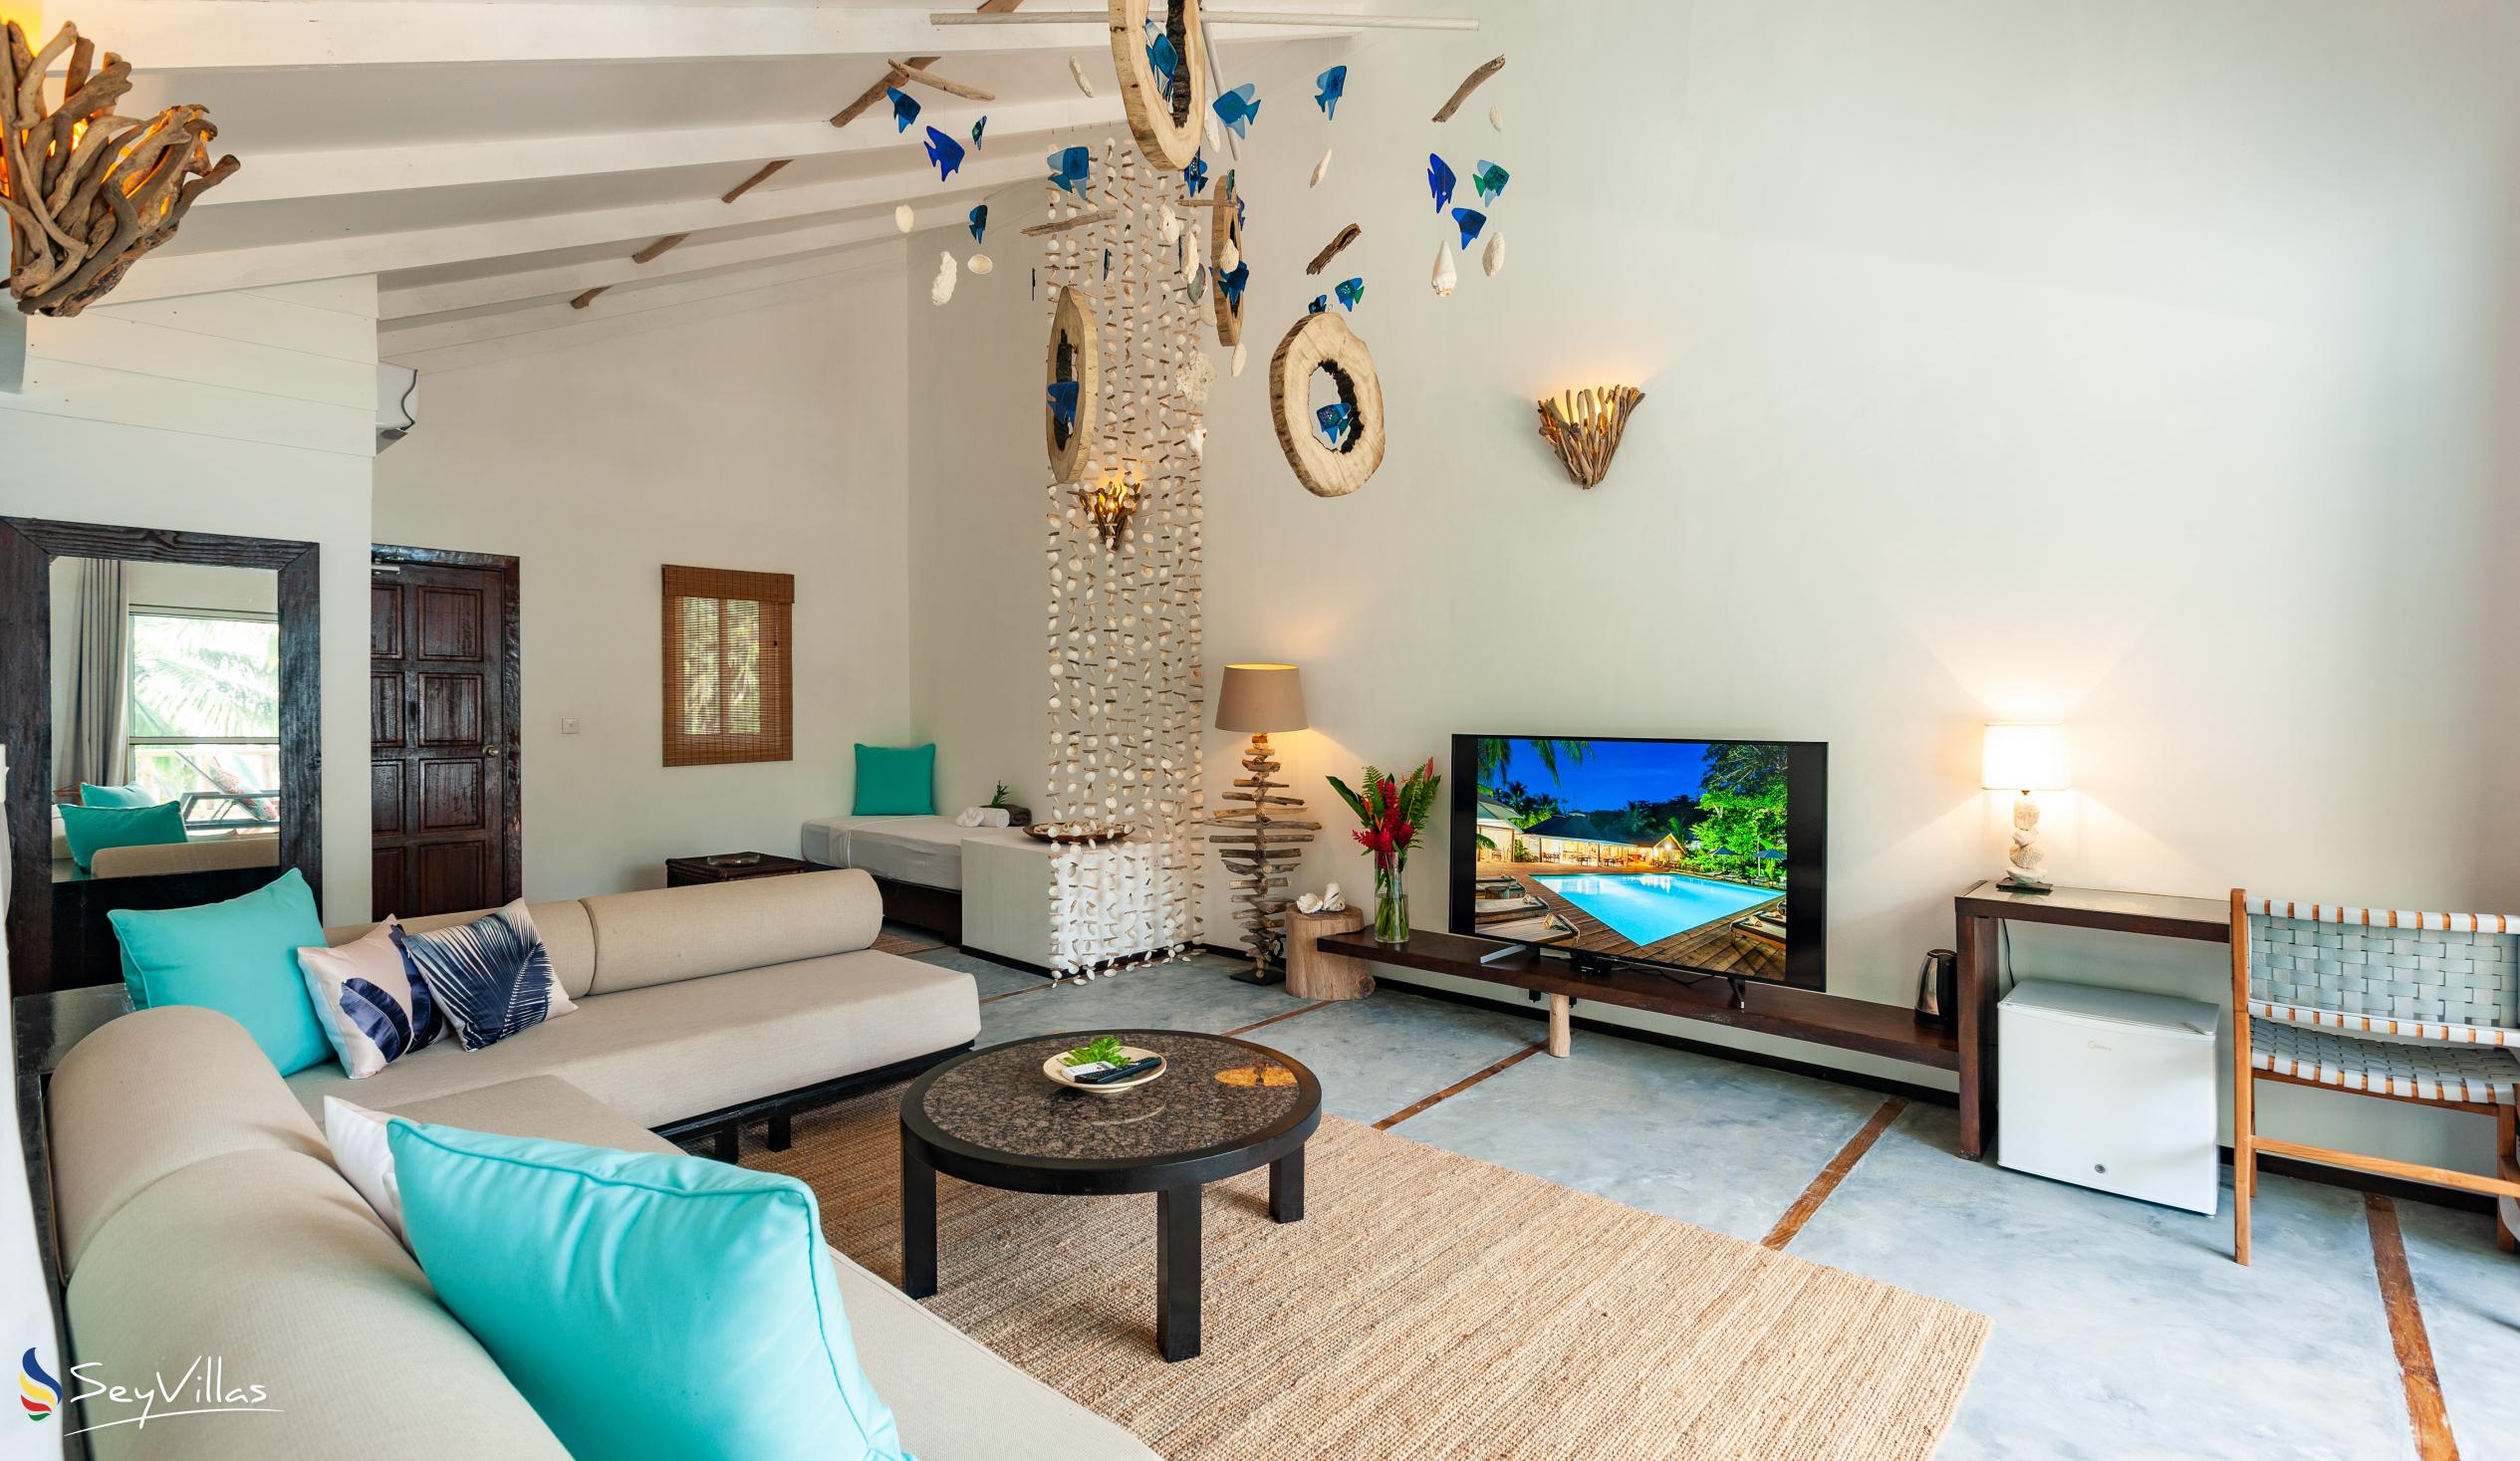 Photo 141: Bliss Hotel Praslin - Beach House - Beach Penthouse - Praslin (Seychelles)